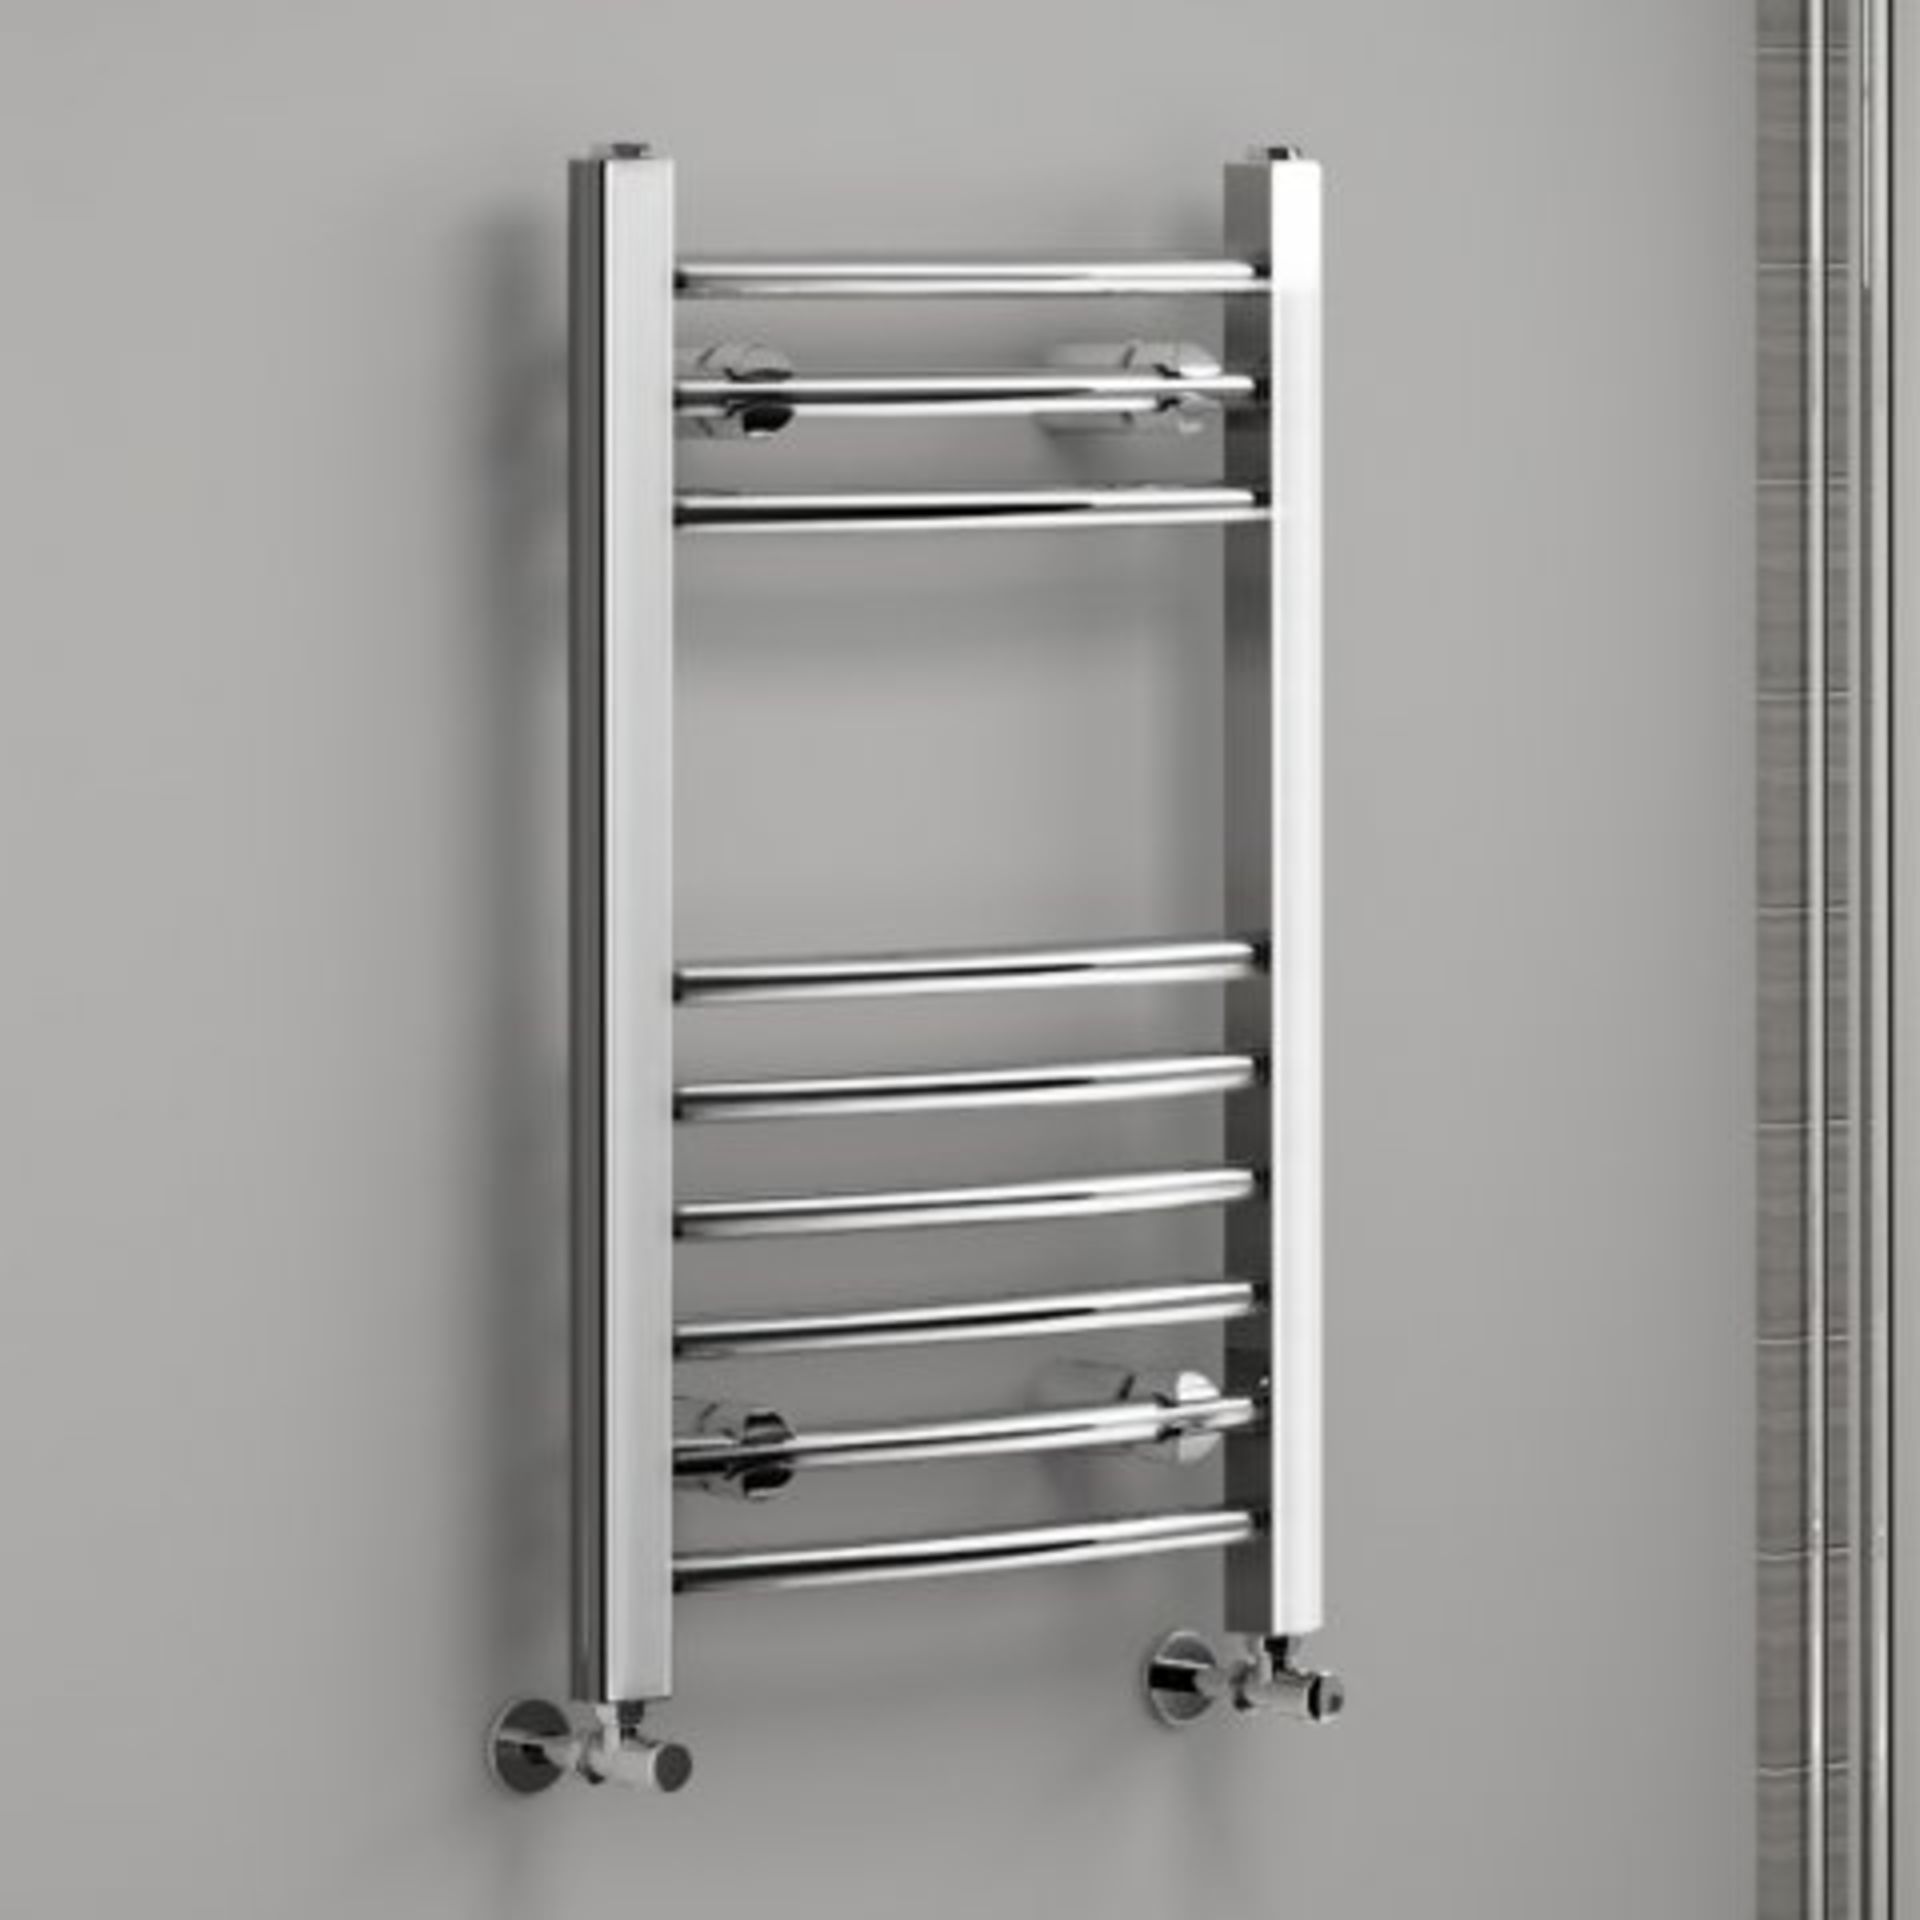 (H15) 650x400mm - 20mm Tubes - Chrome Curved Rail Ladder Towel Radiator - Nancy. Our Nancy 650x400mm